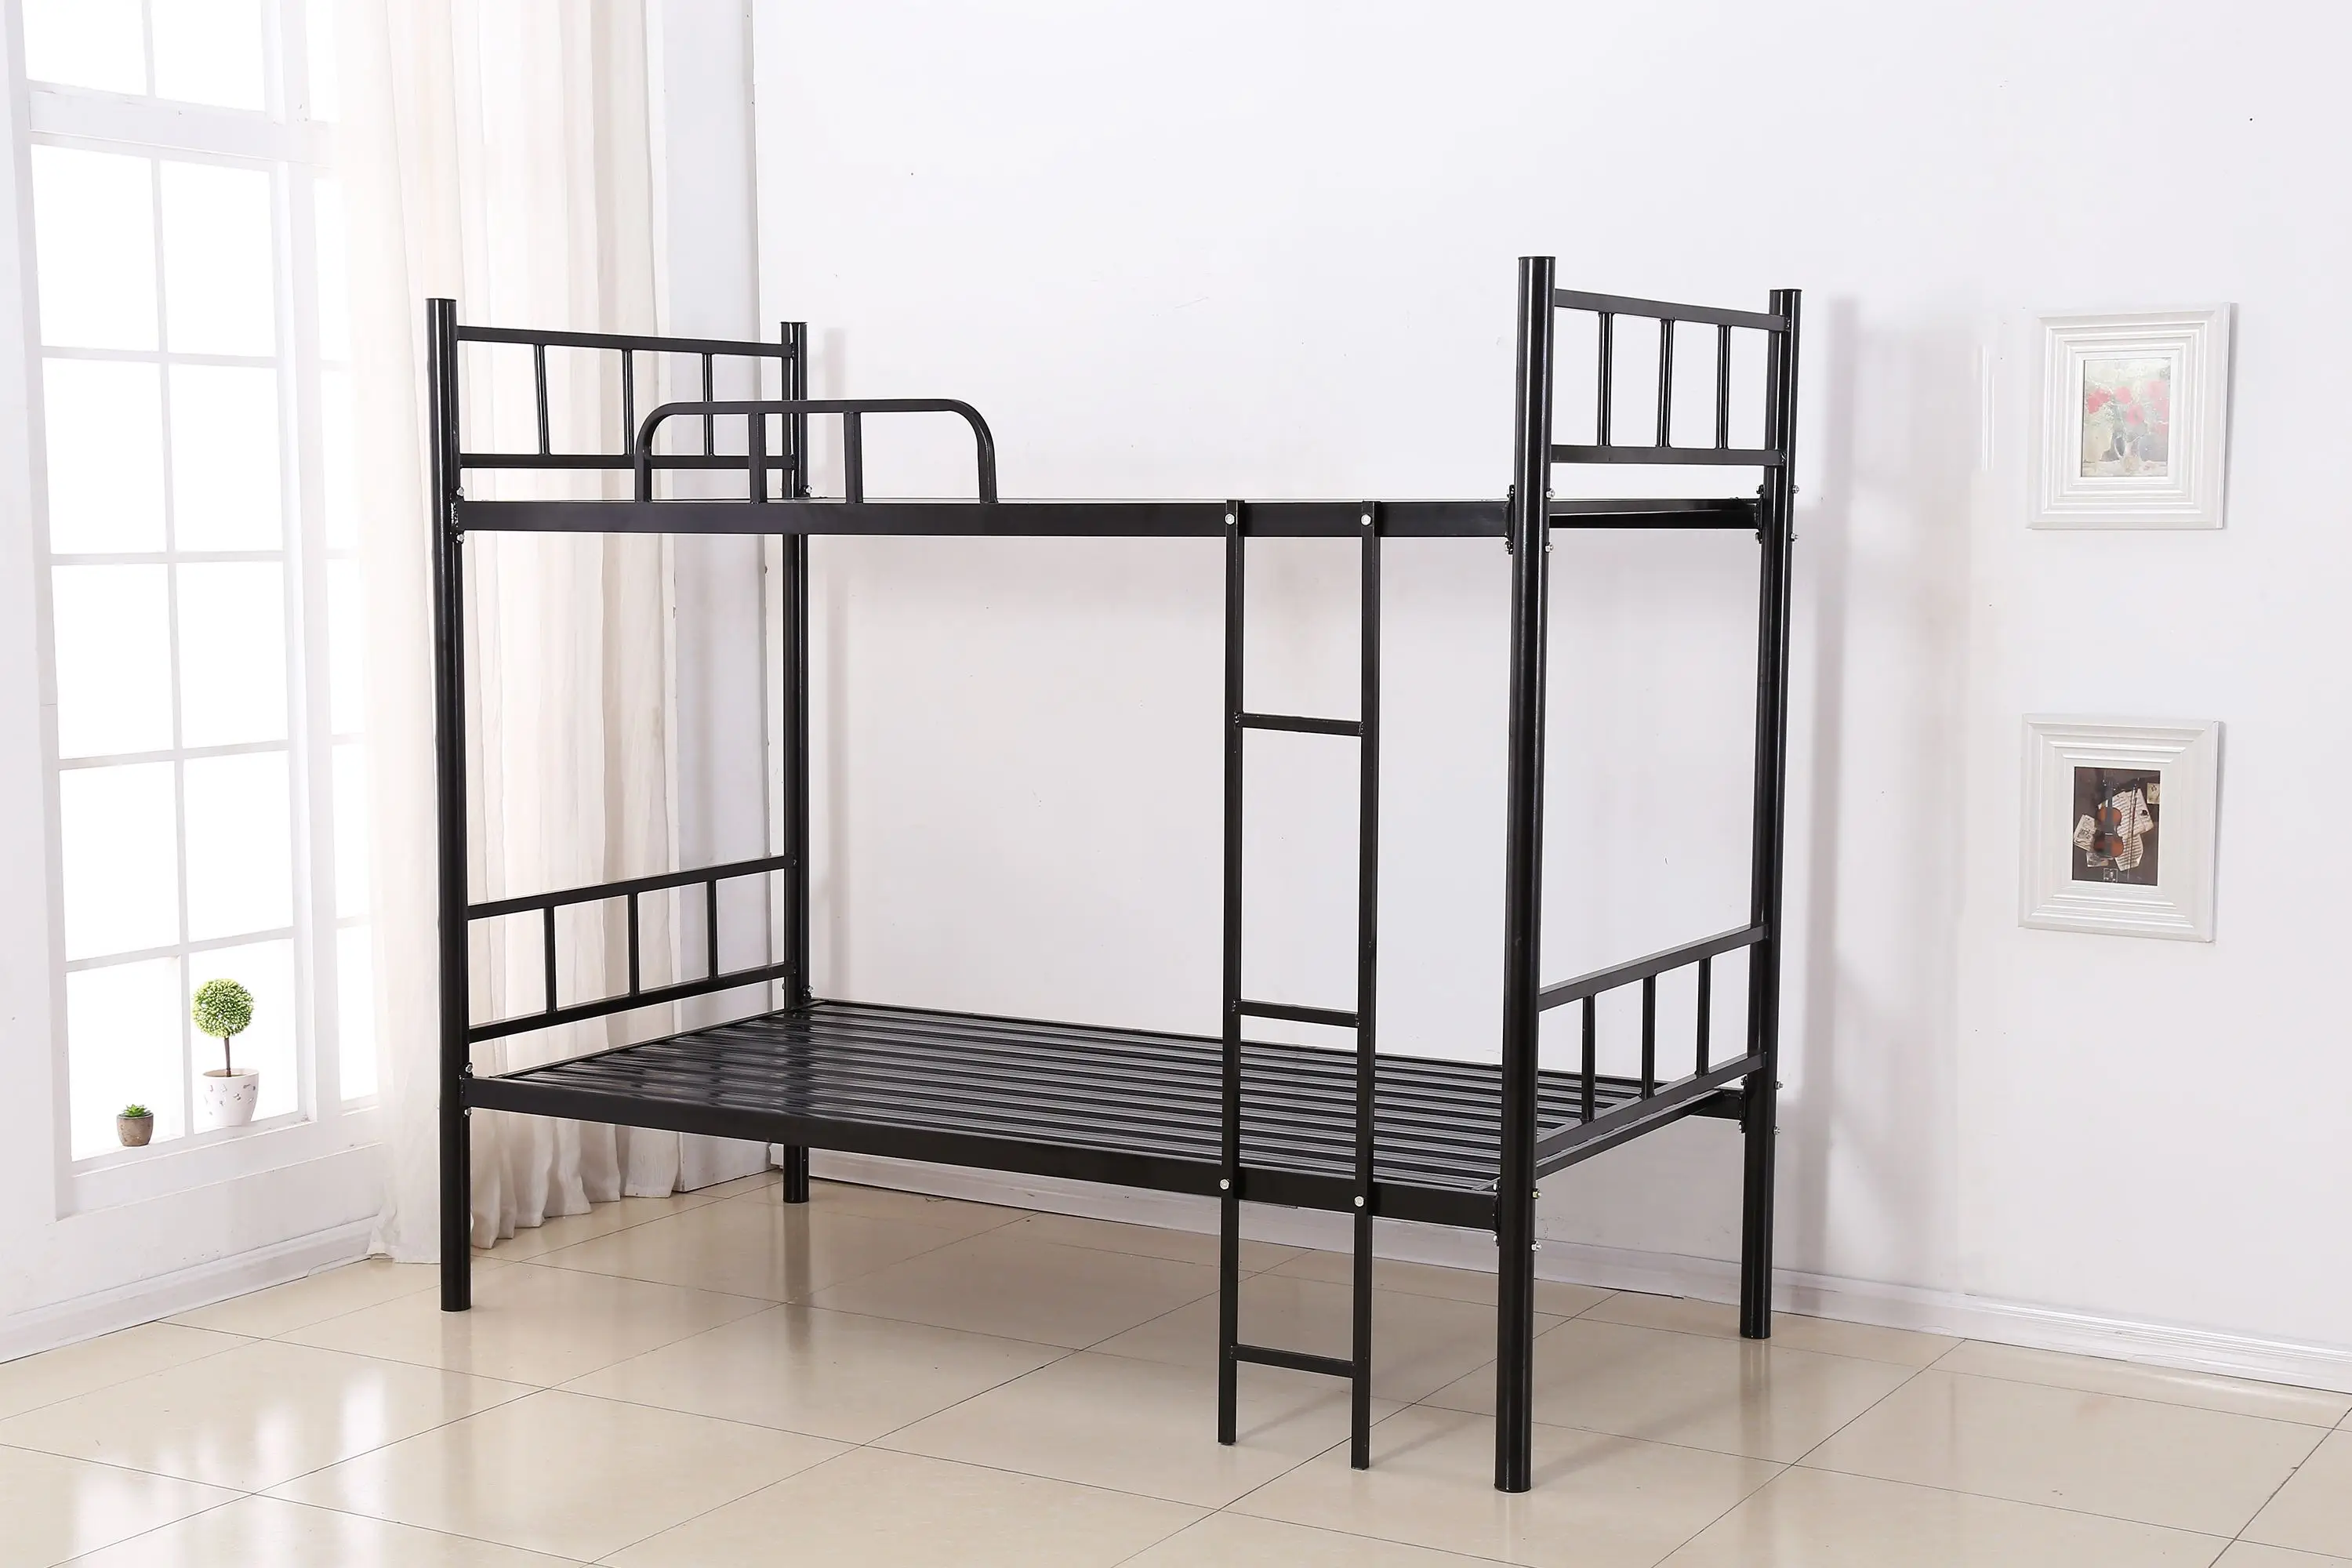 
commercial grade black steel frame iron dubai bunk beds 